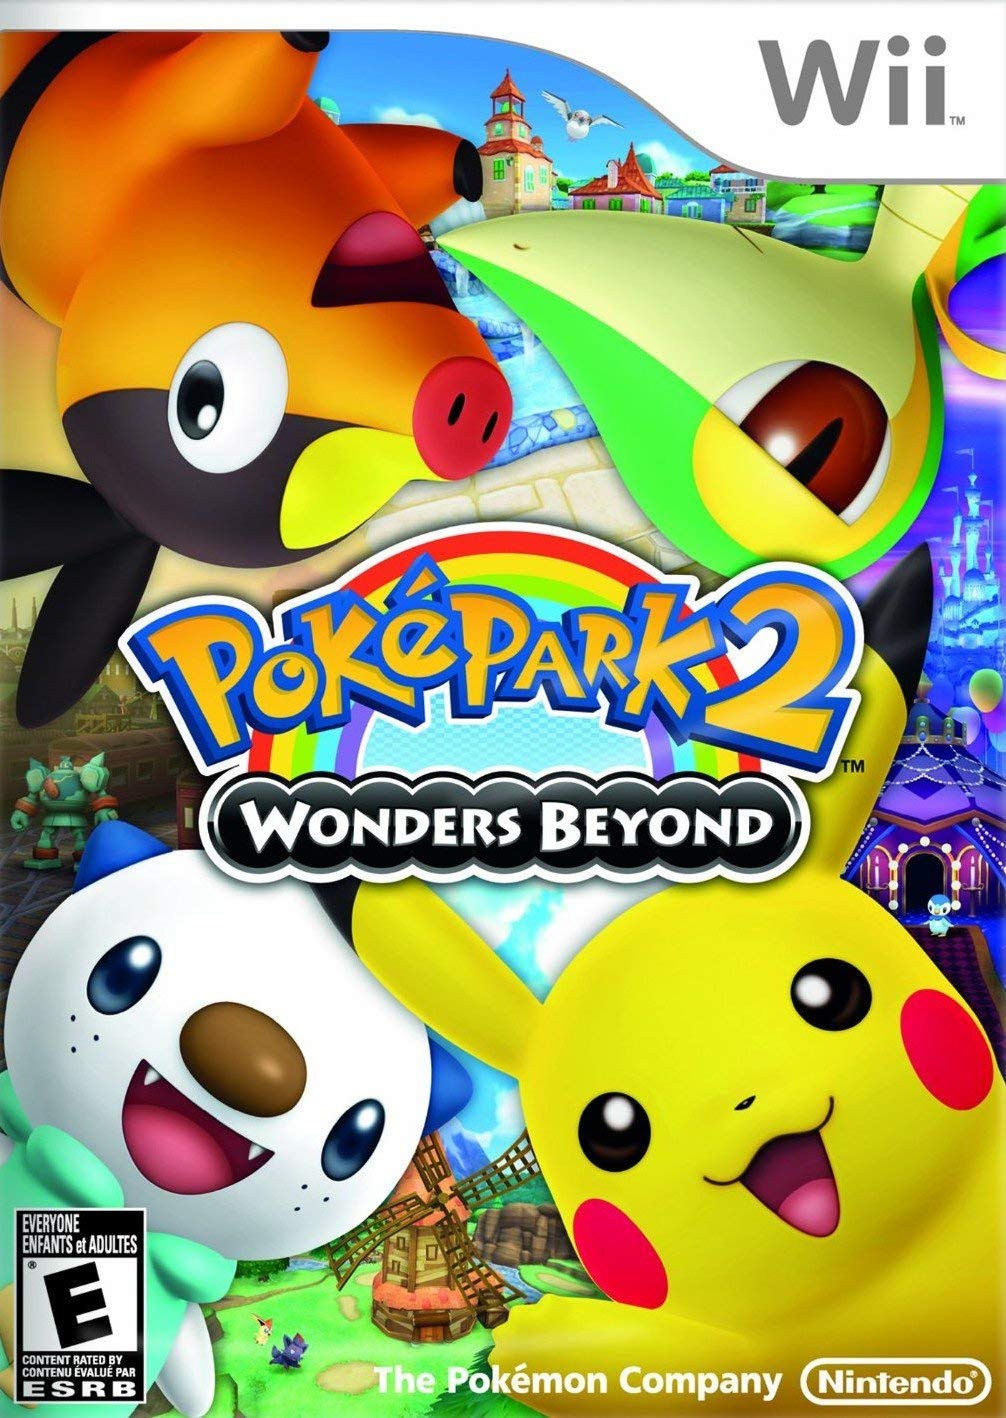 PokéPark 2: Wonders Beyond player count stats